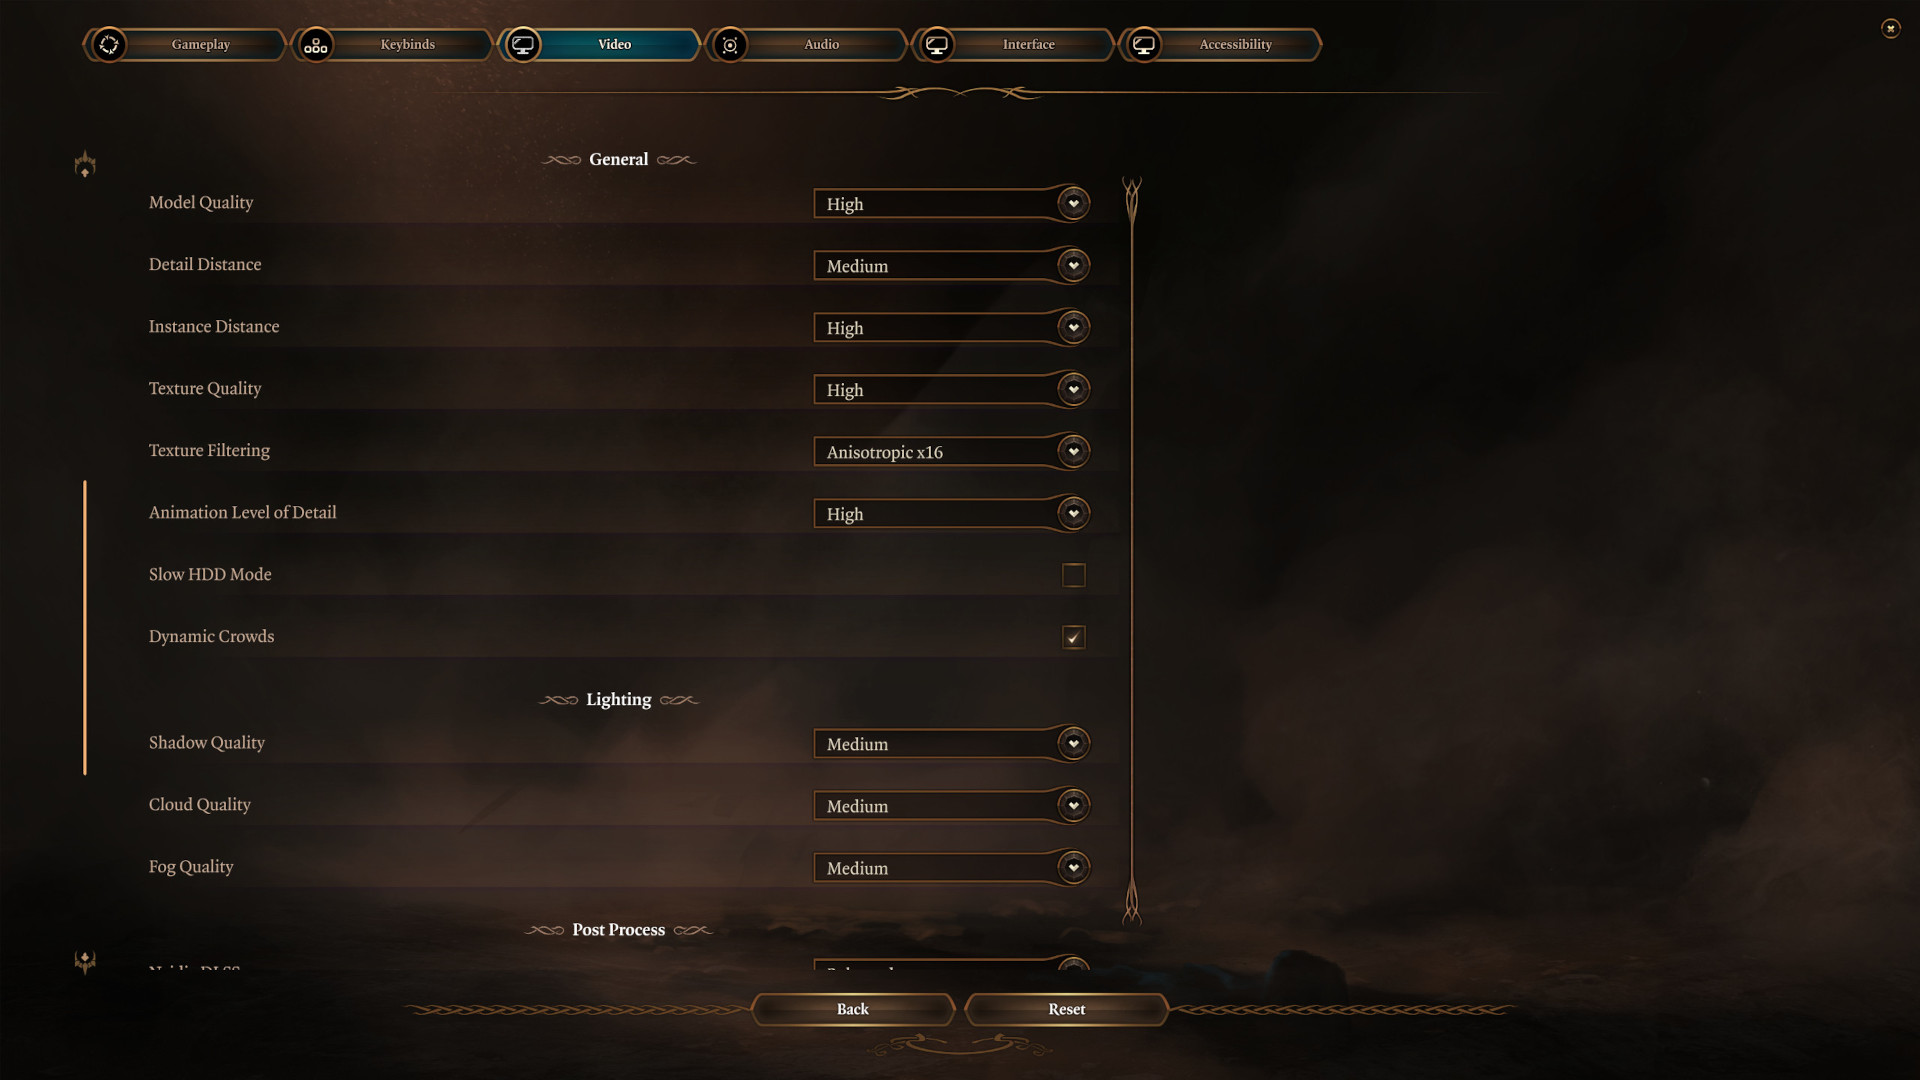 Baldur's Gate 3 optimized PC settings for max FPS - Xfire